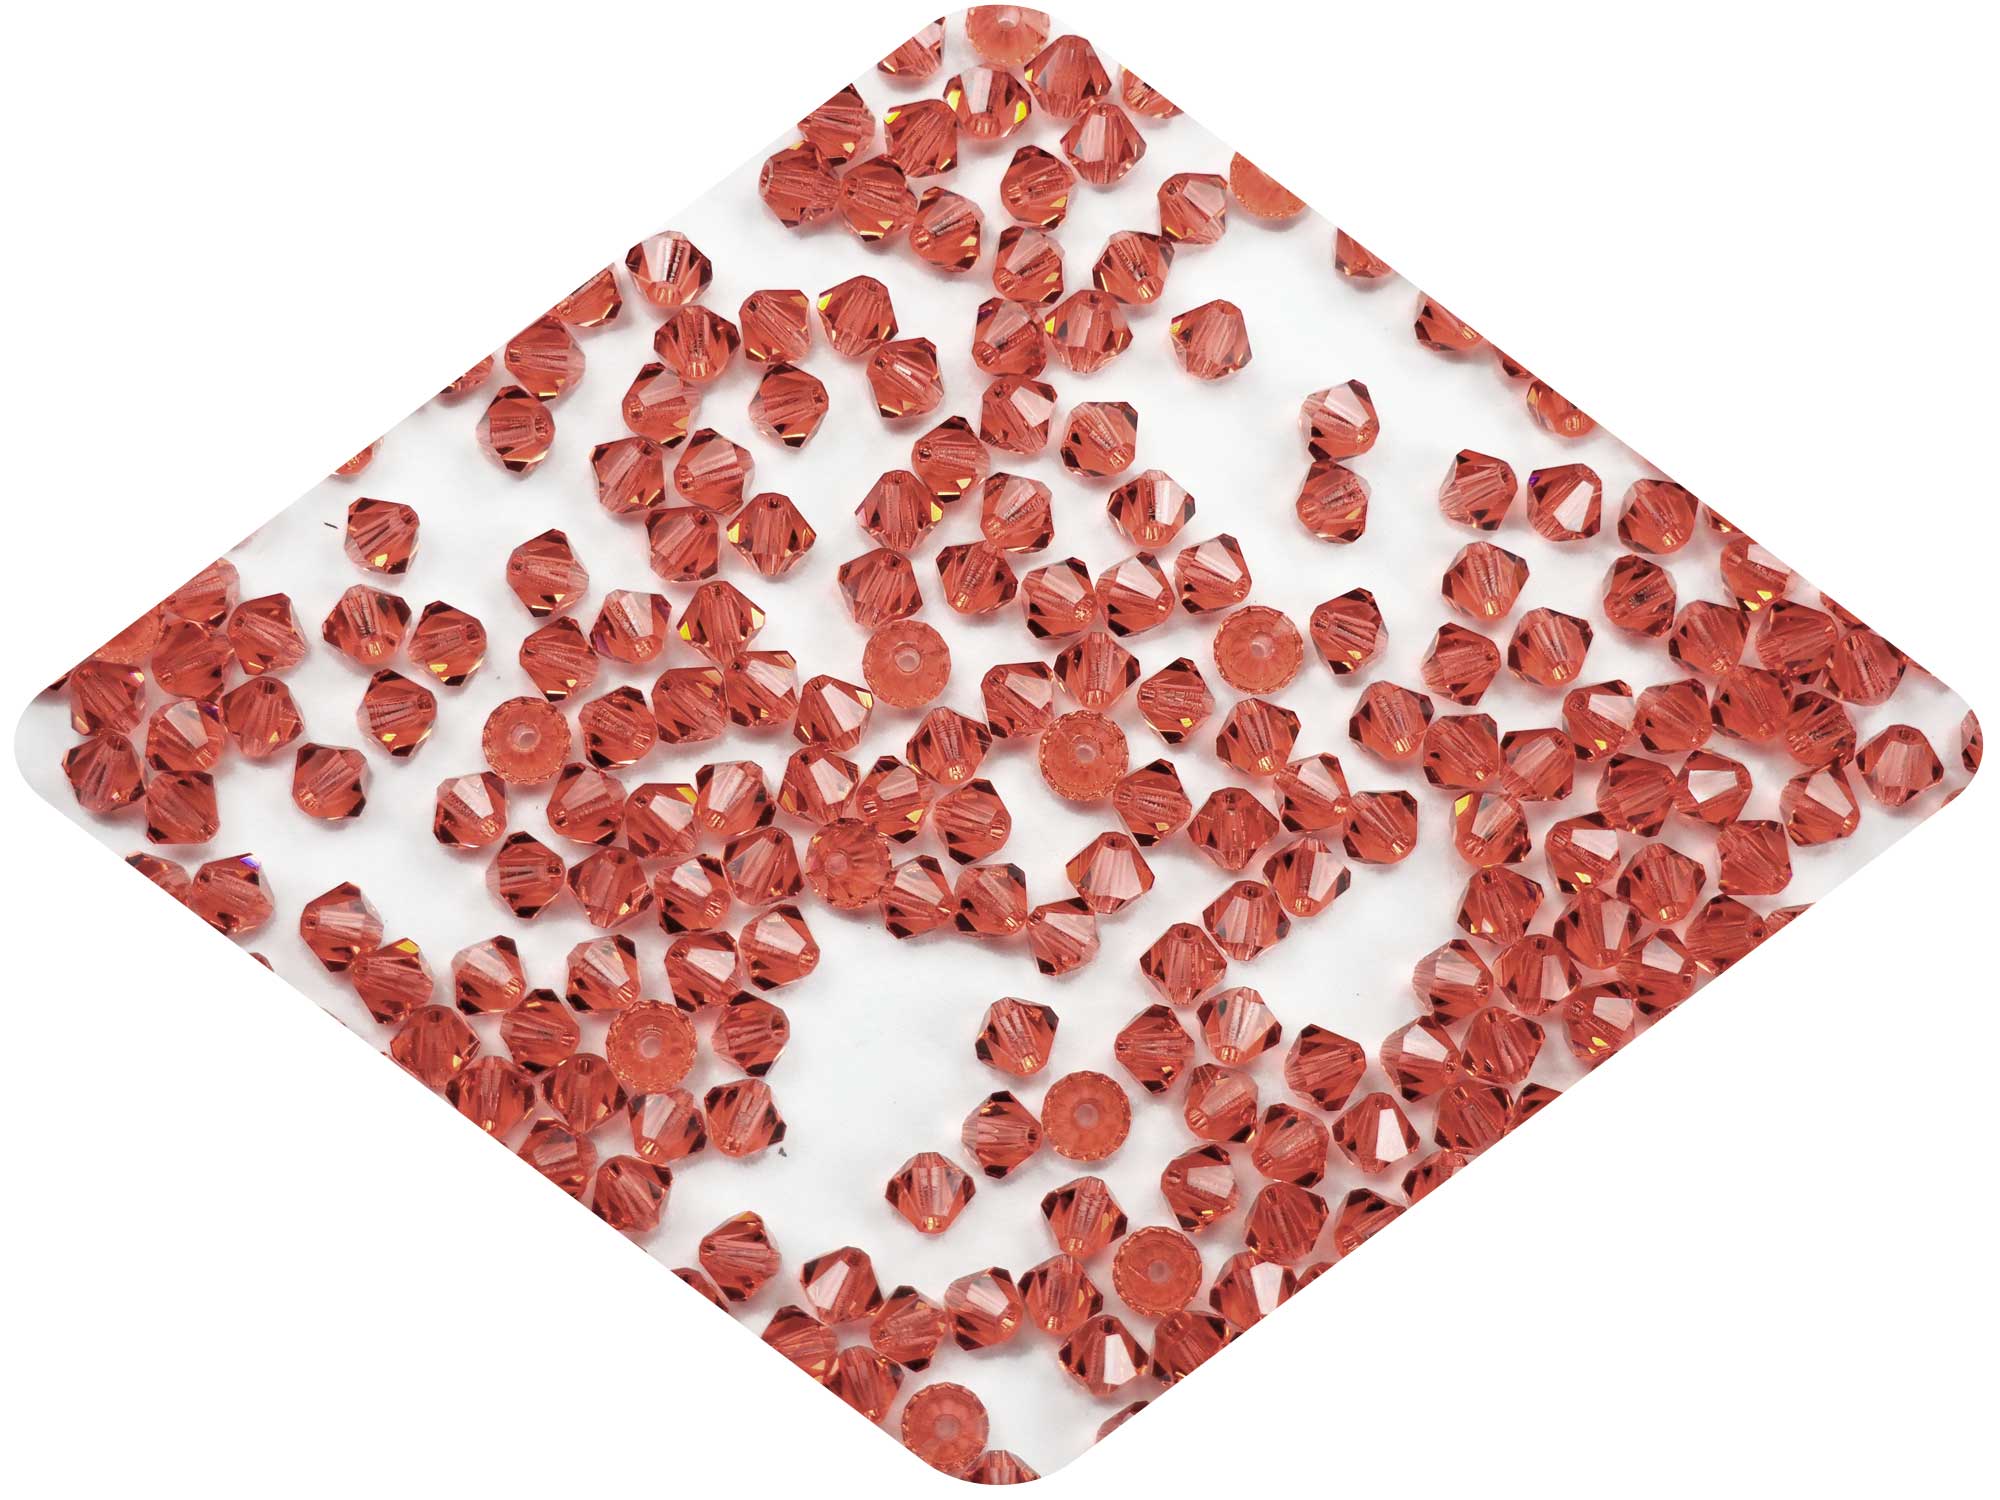 Padparadscha, Czech Glass Beads, Machine Cut Bicones (MC Rondell, Diamond Shape), red pink crystals